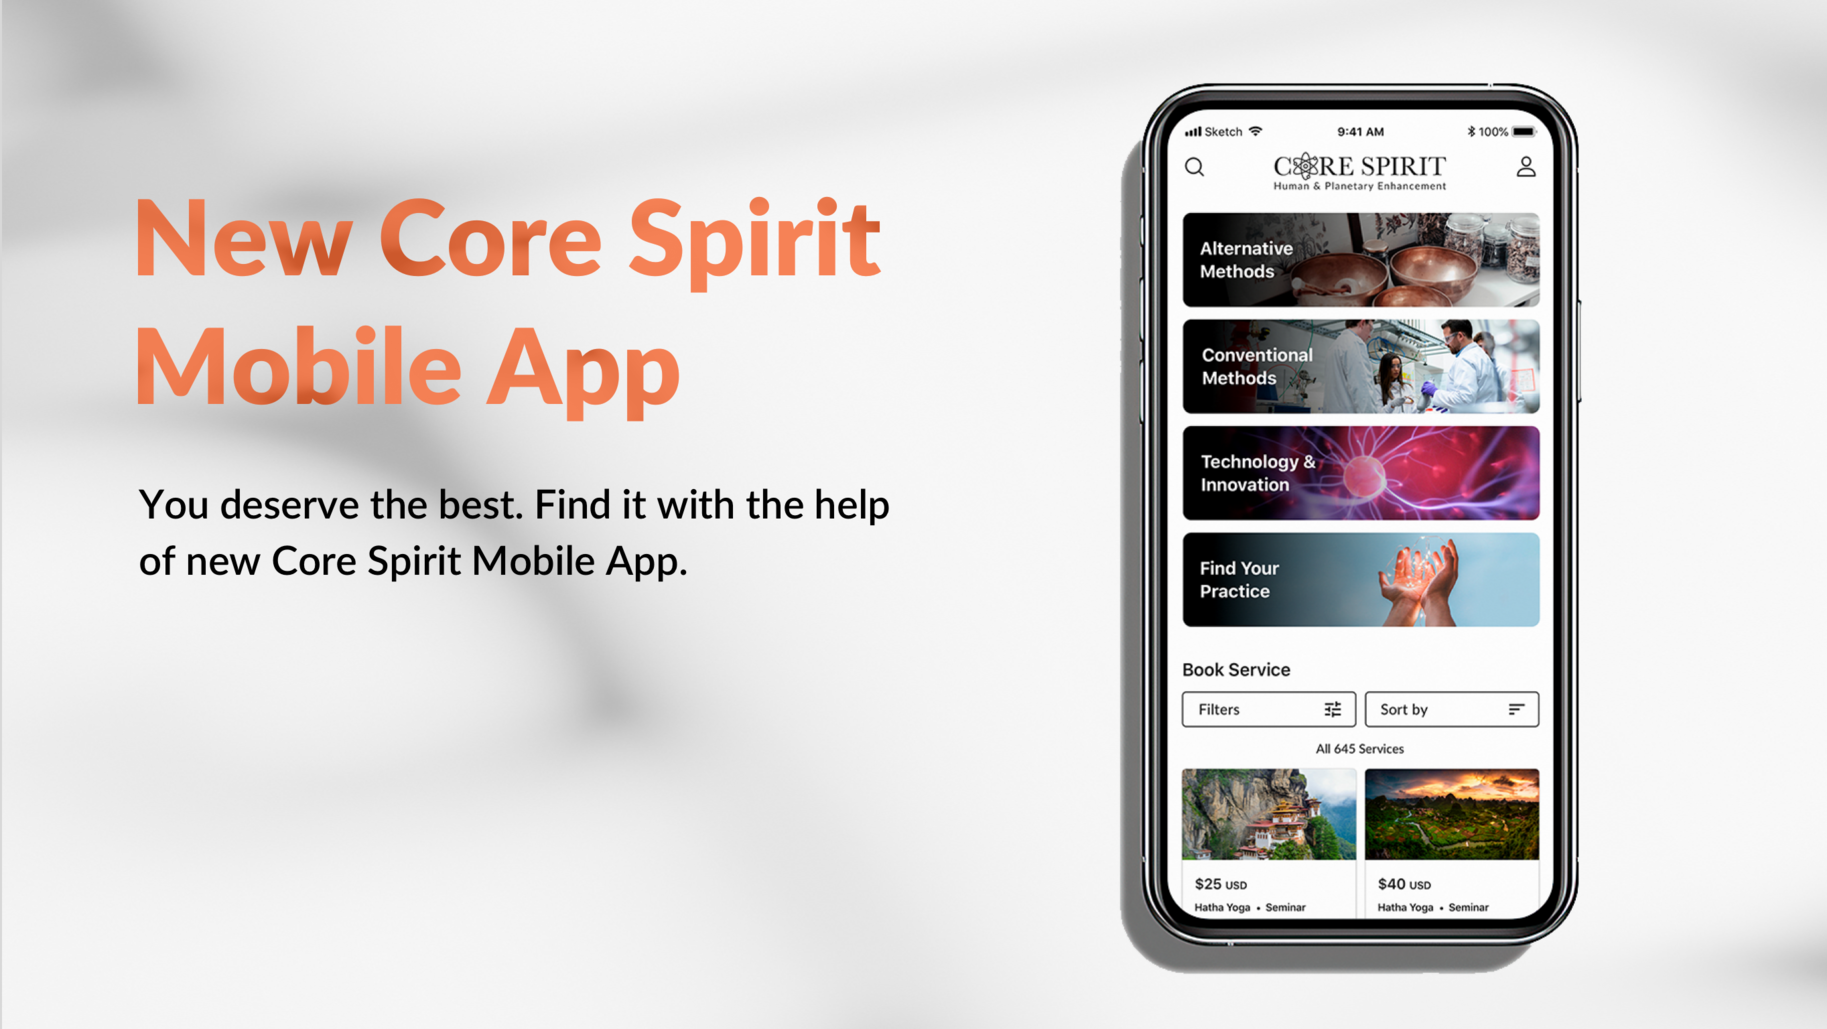 CORE SPIRIT Cellular App: Contemporary Aspects